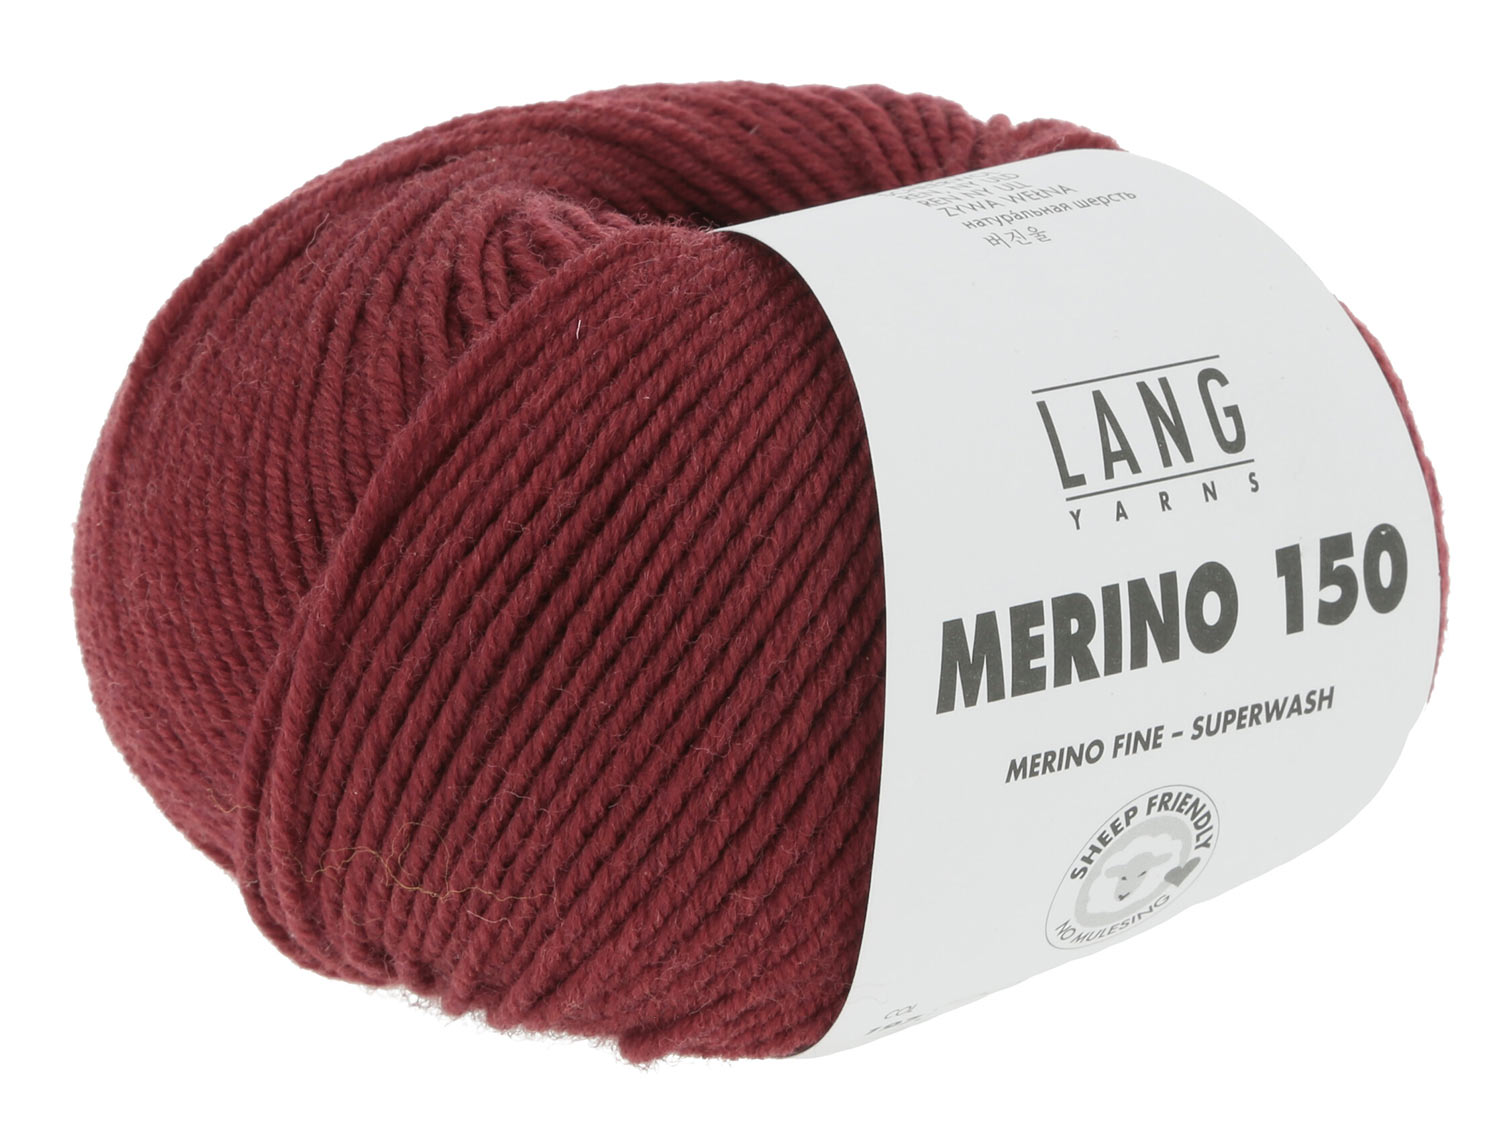 MERINO 150 - Lang Yarns